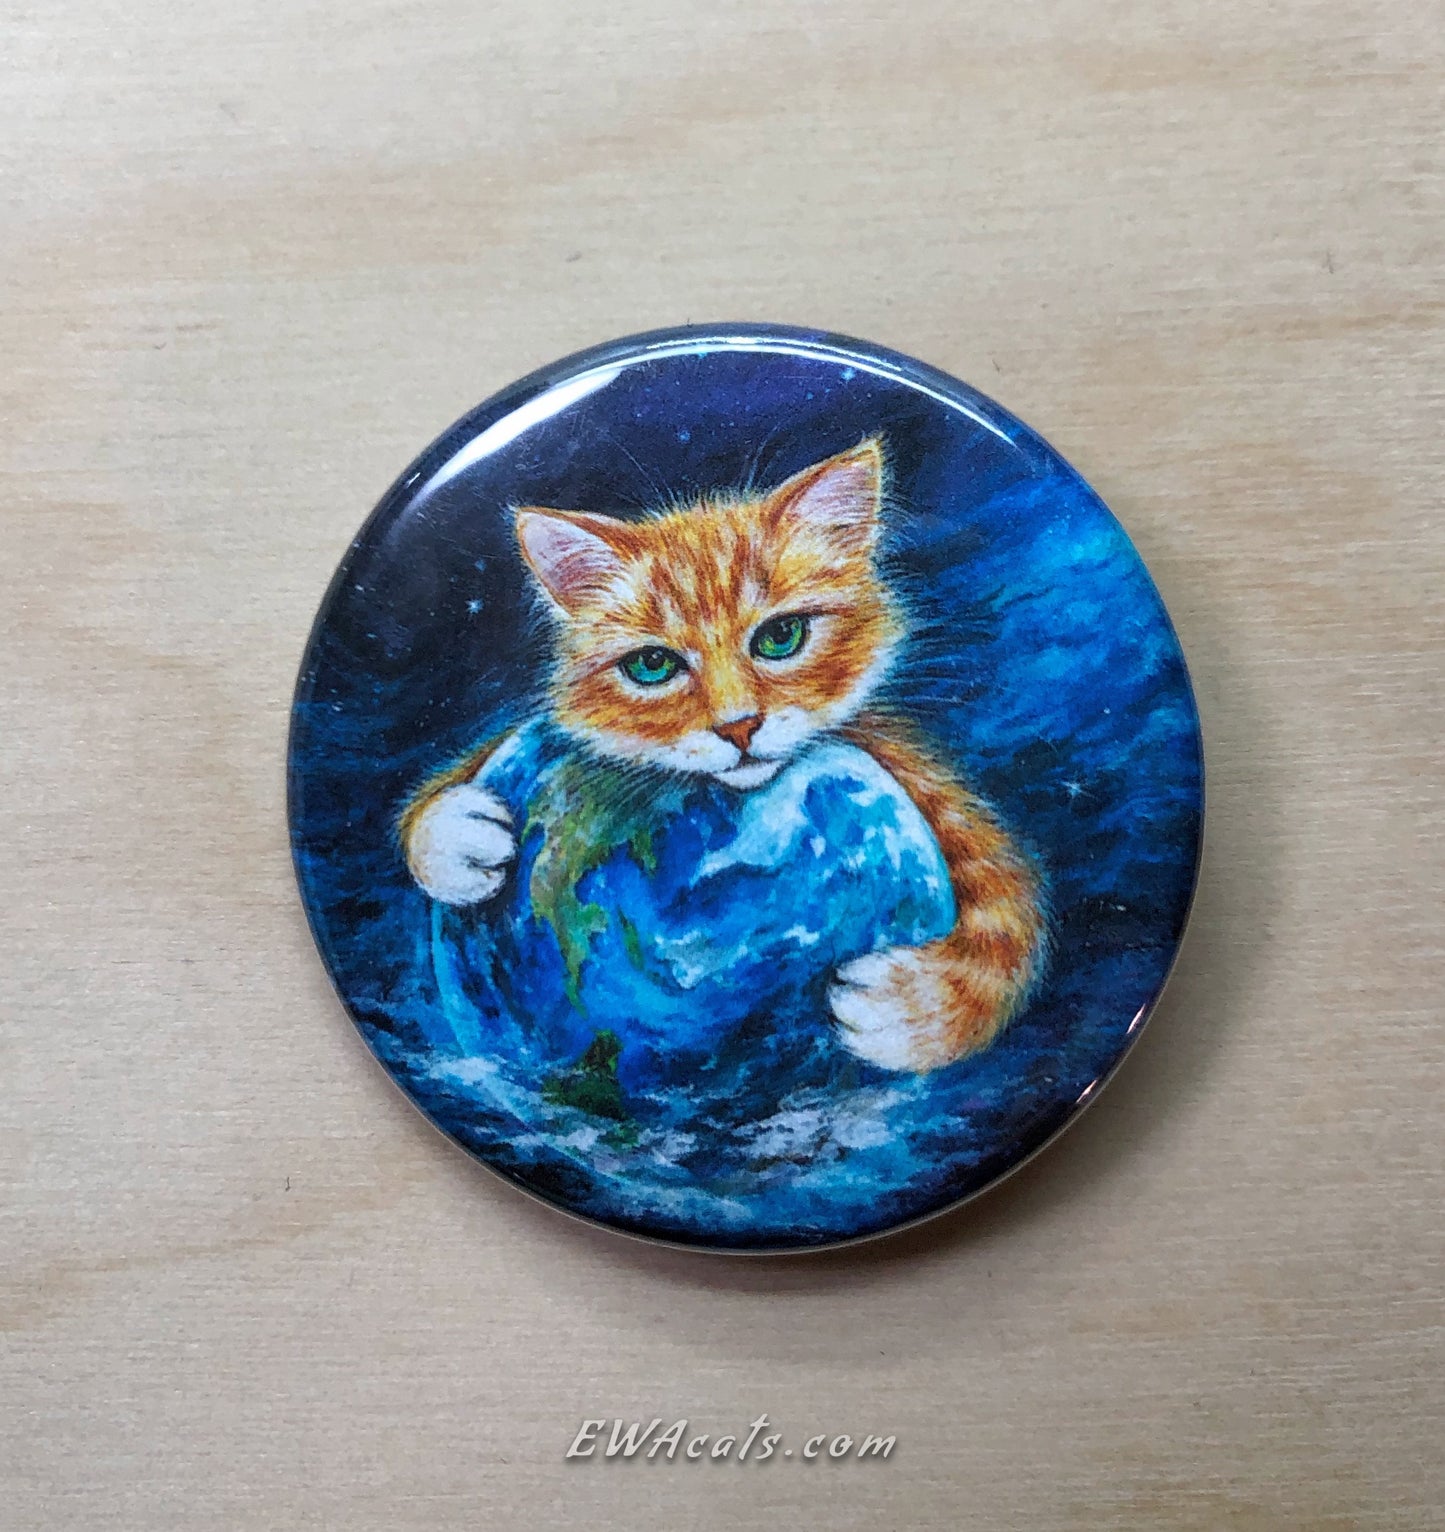 Button "It's a Cat's World"